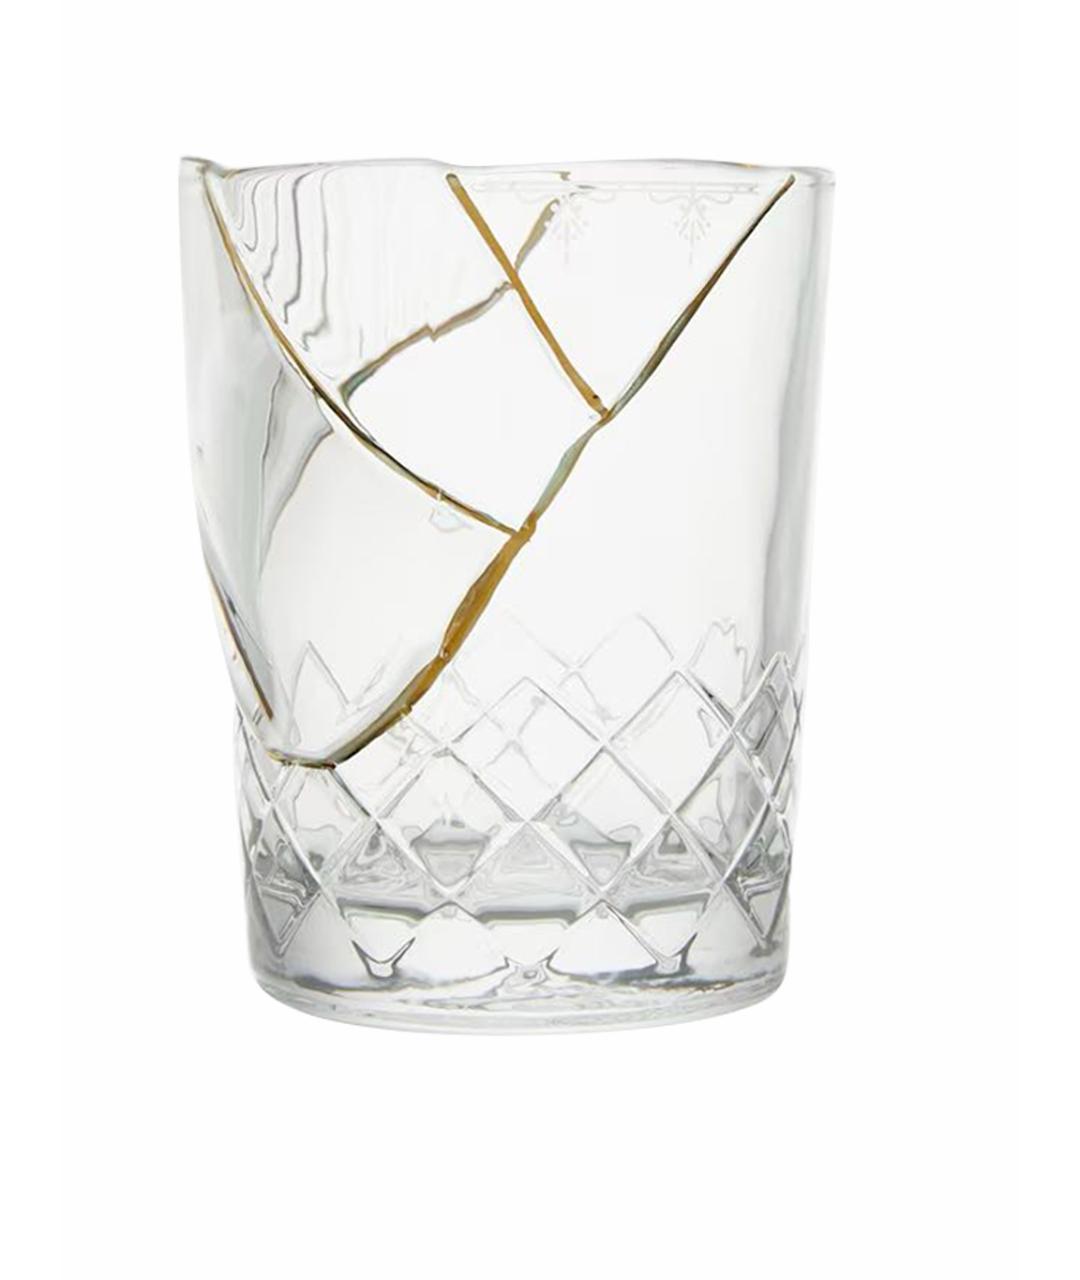 Seletti Стеклянный бокал для воды, фото 1